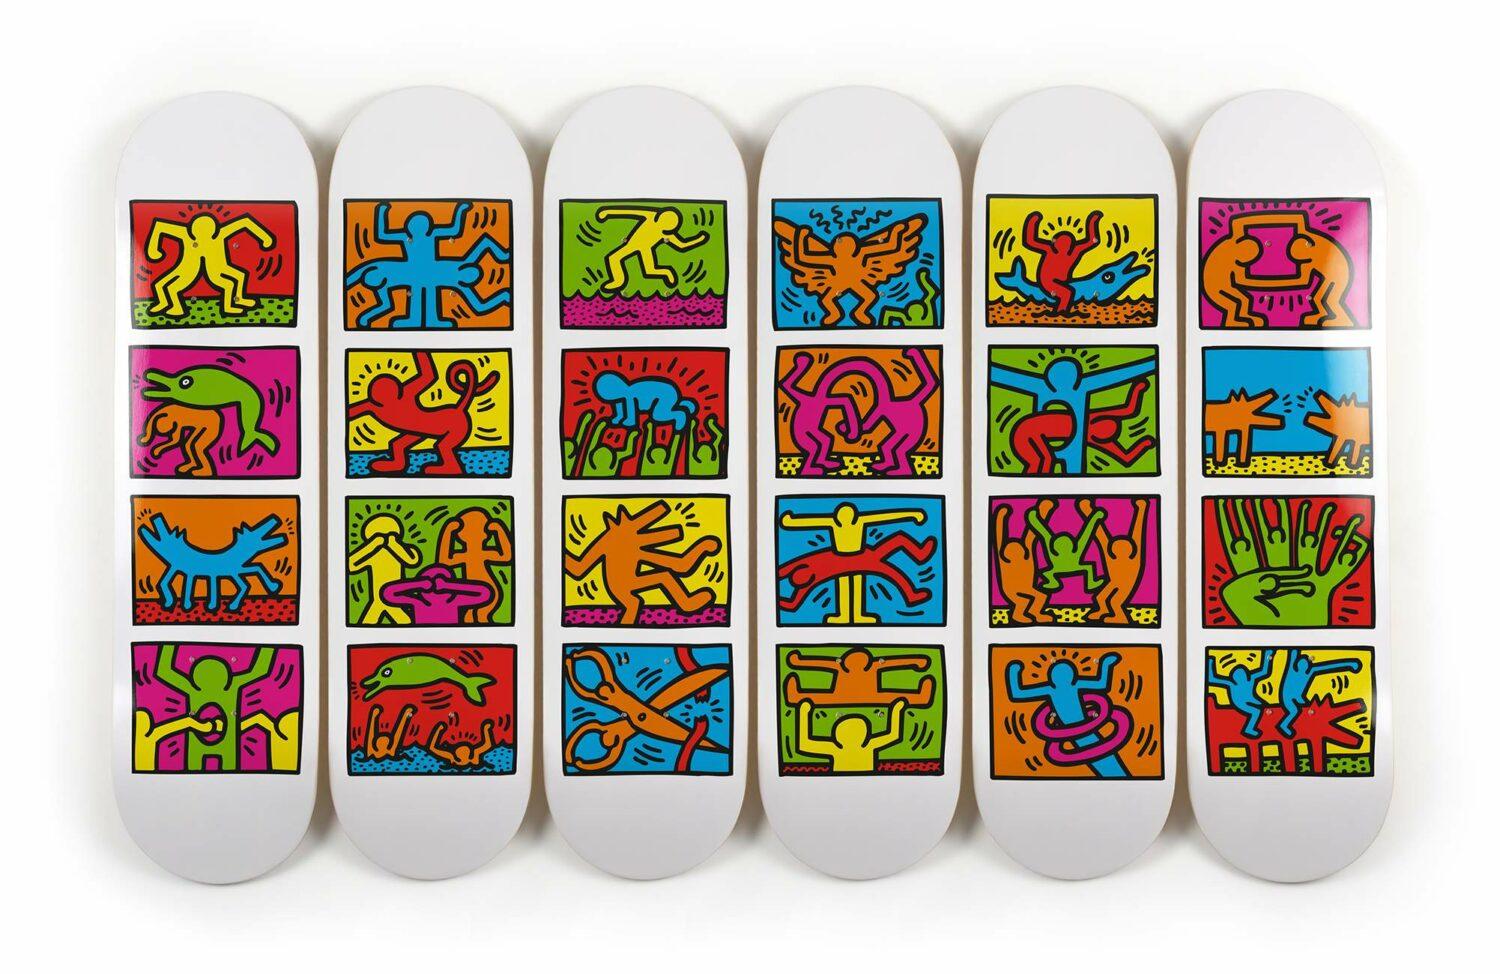 Keith Haring
Retrospect, 2019
Screenprint on skateboard
31 1/2 × 7 9/10 in  80 × 20 cm (each)
